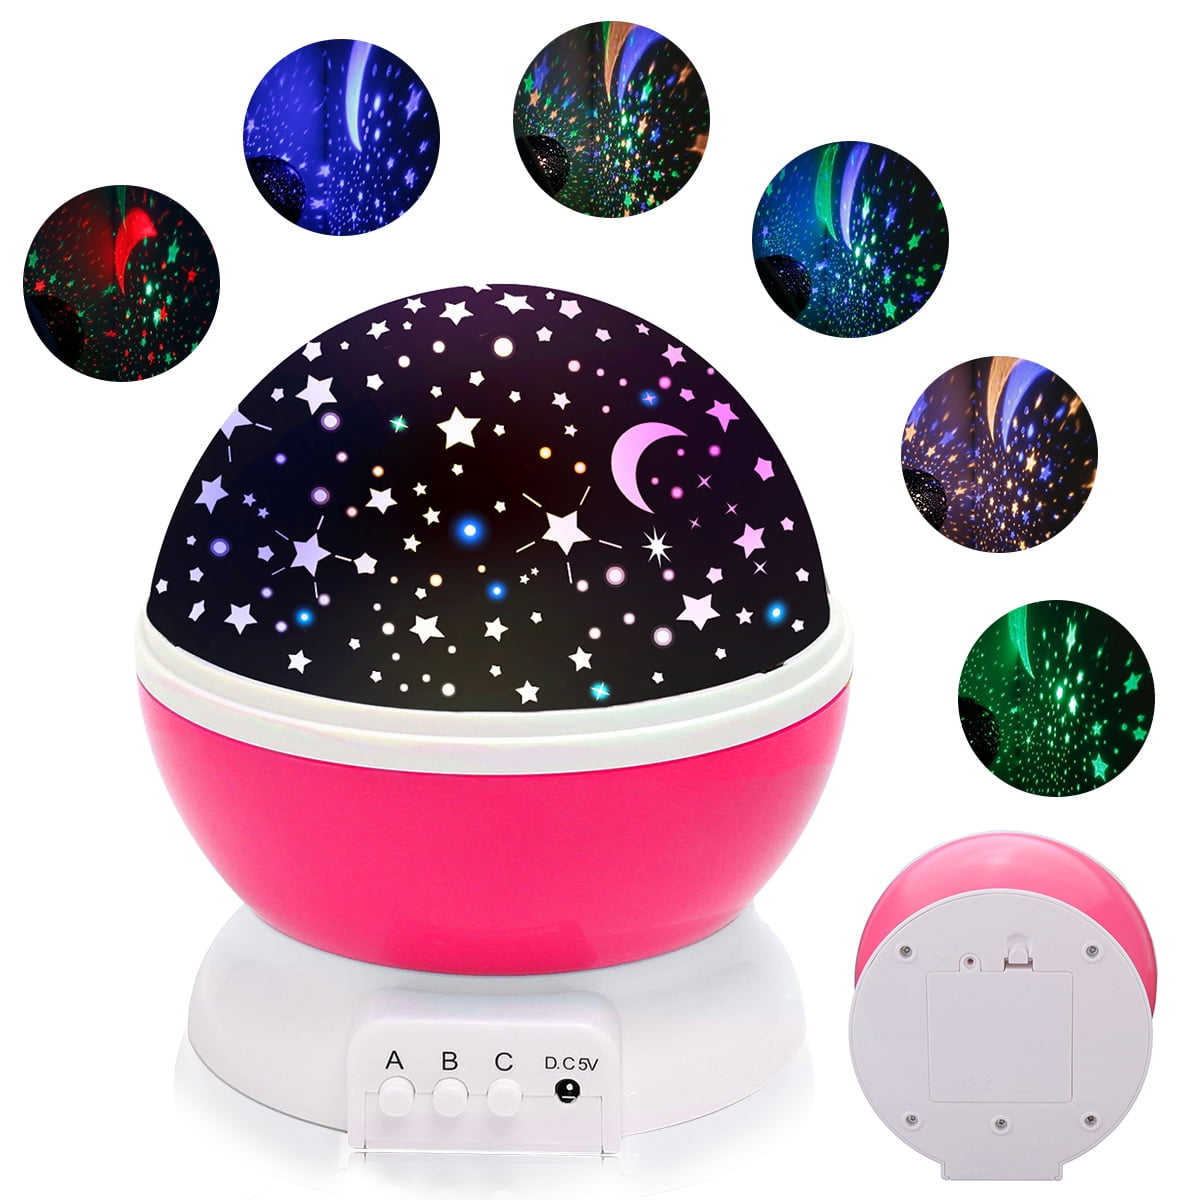 Toy for Children Kids LED Night Light Star Moon Constellation Christmas Gift 